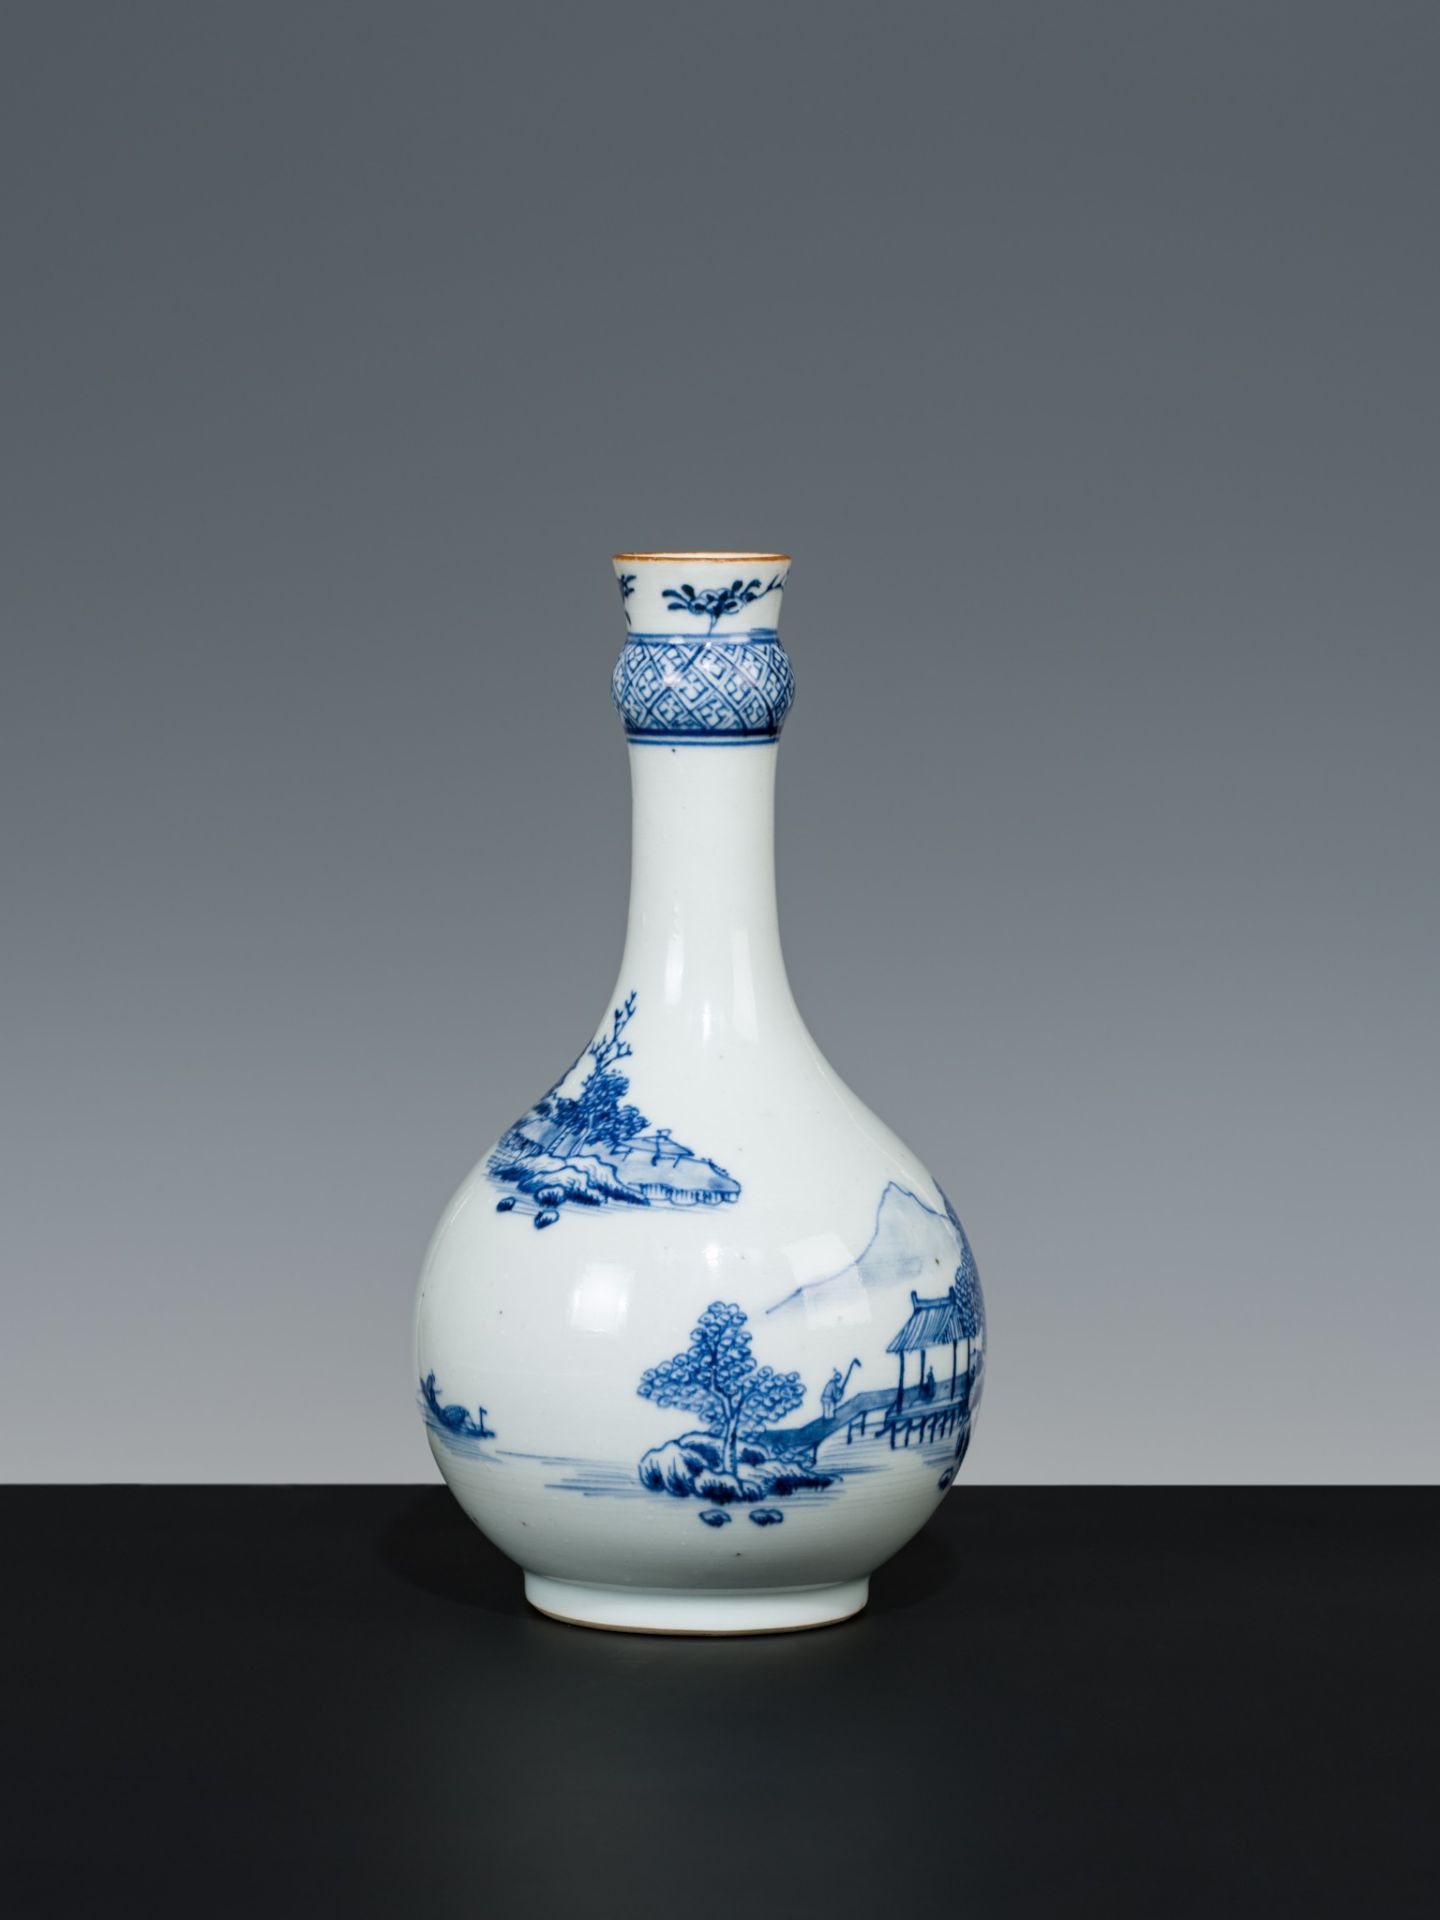 A BLUE AND WHITE PORCELAIN BOTTLE VASE, CHINA, 18TH CENTURY - Image 3 of 8